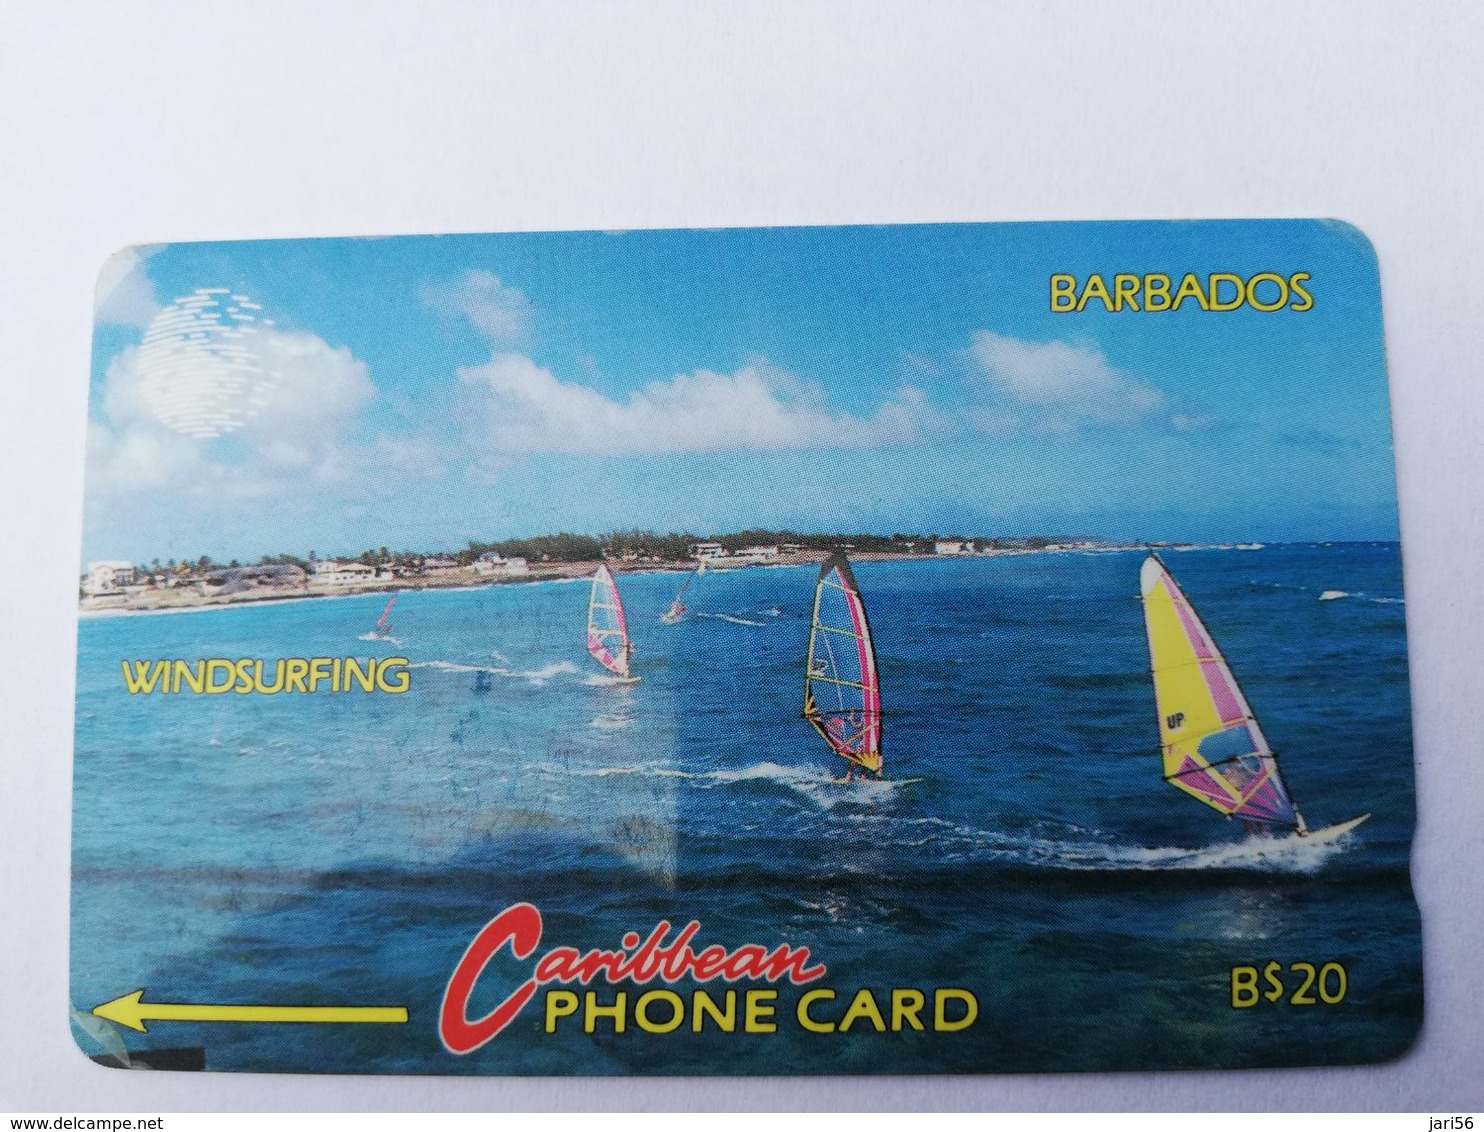 BARBADOS   $20-  Gpt Magnetic     BAR-10B  10CBDB   WINDSURFING     NEW  LOGO         Very Fine Used  Card  ** 2879** - Barbados